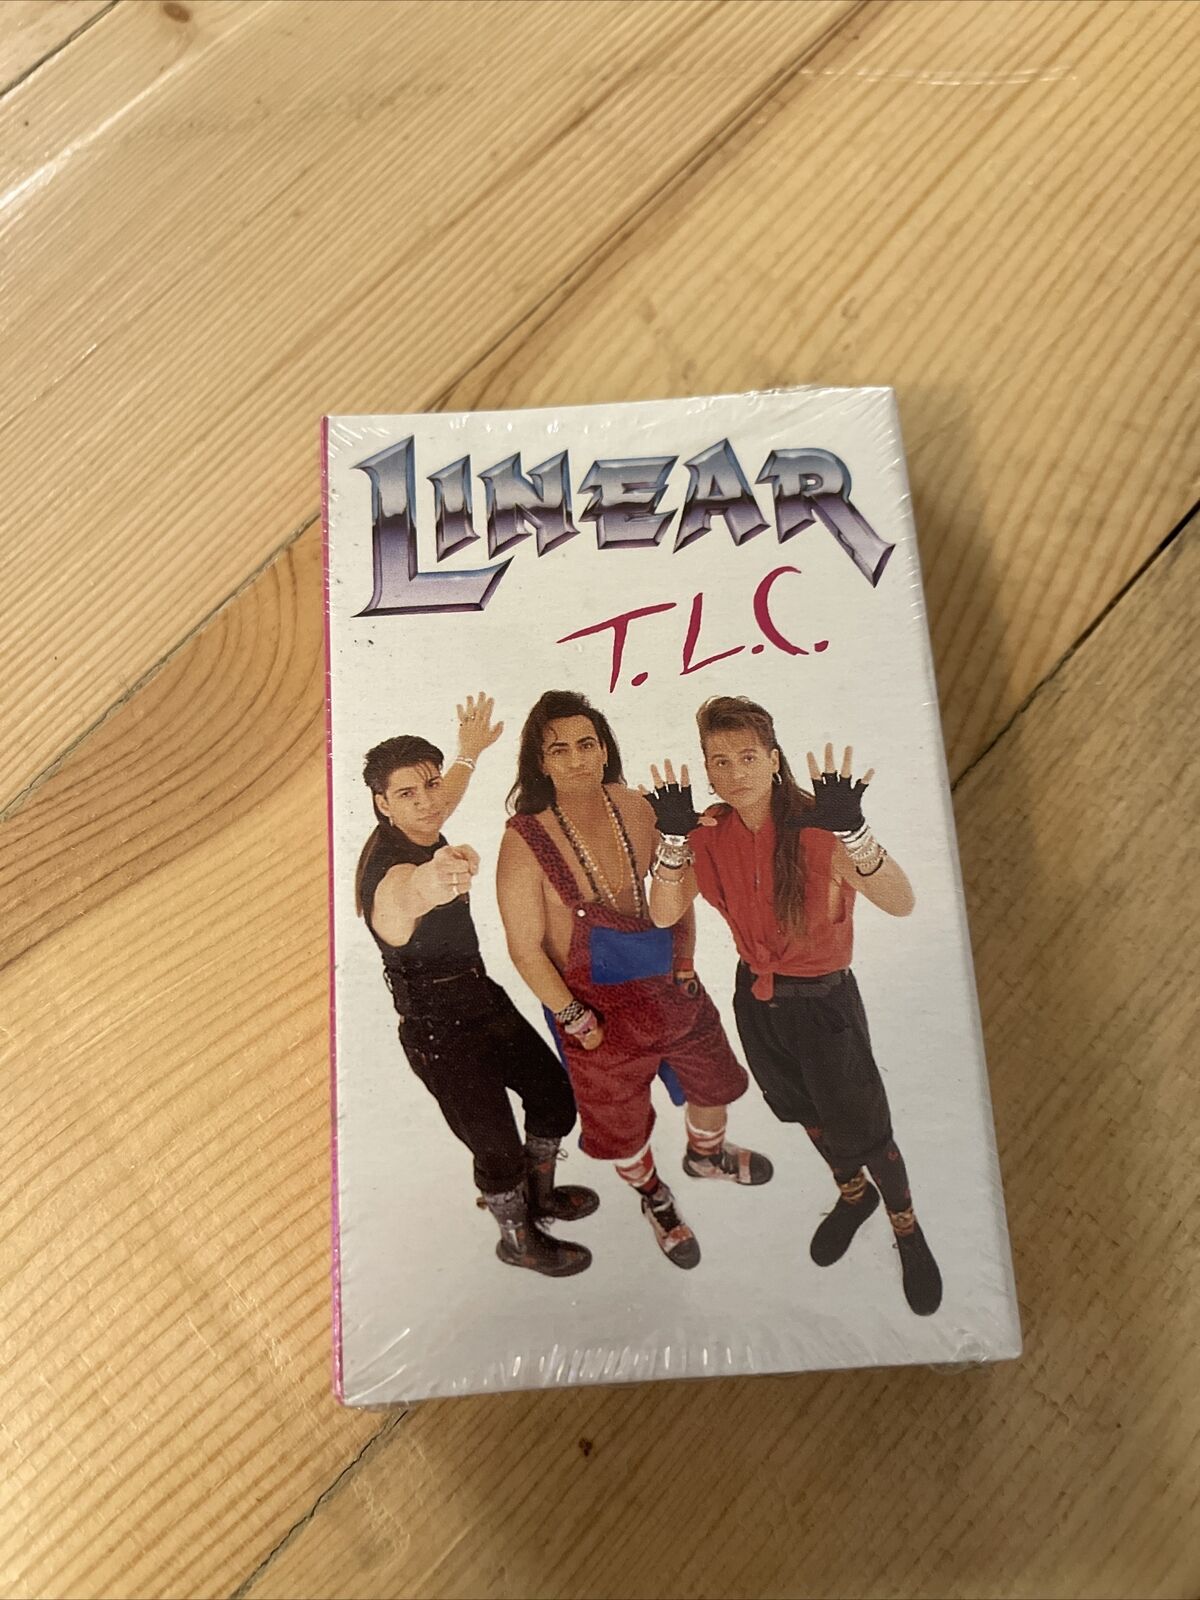 Sealed Linear T.L.C. Cassette Single 1992